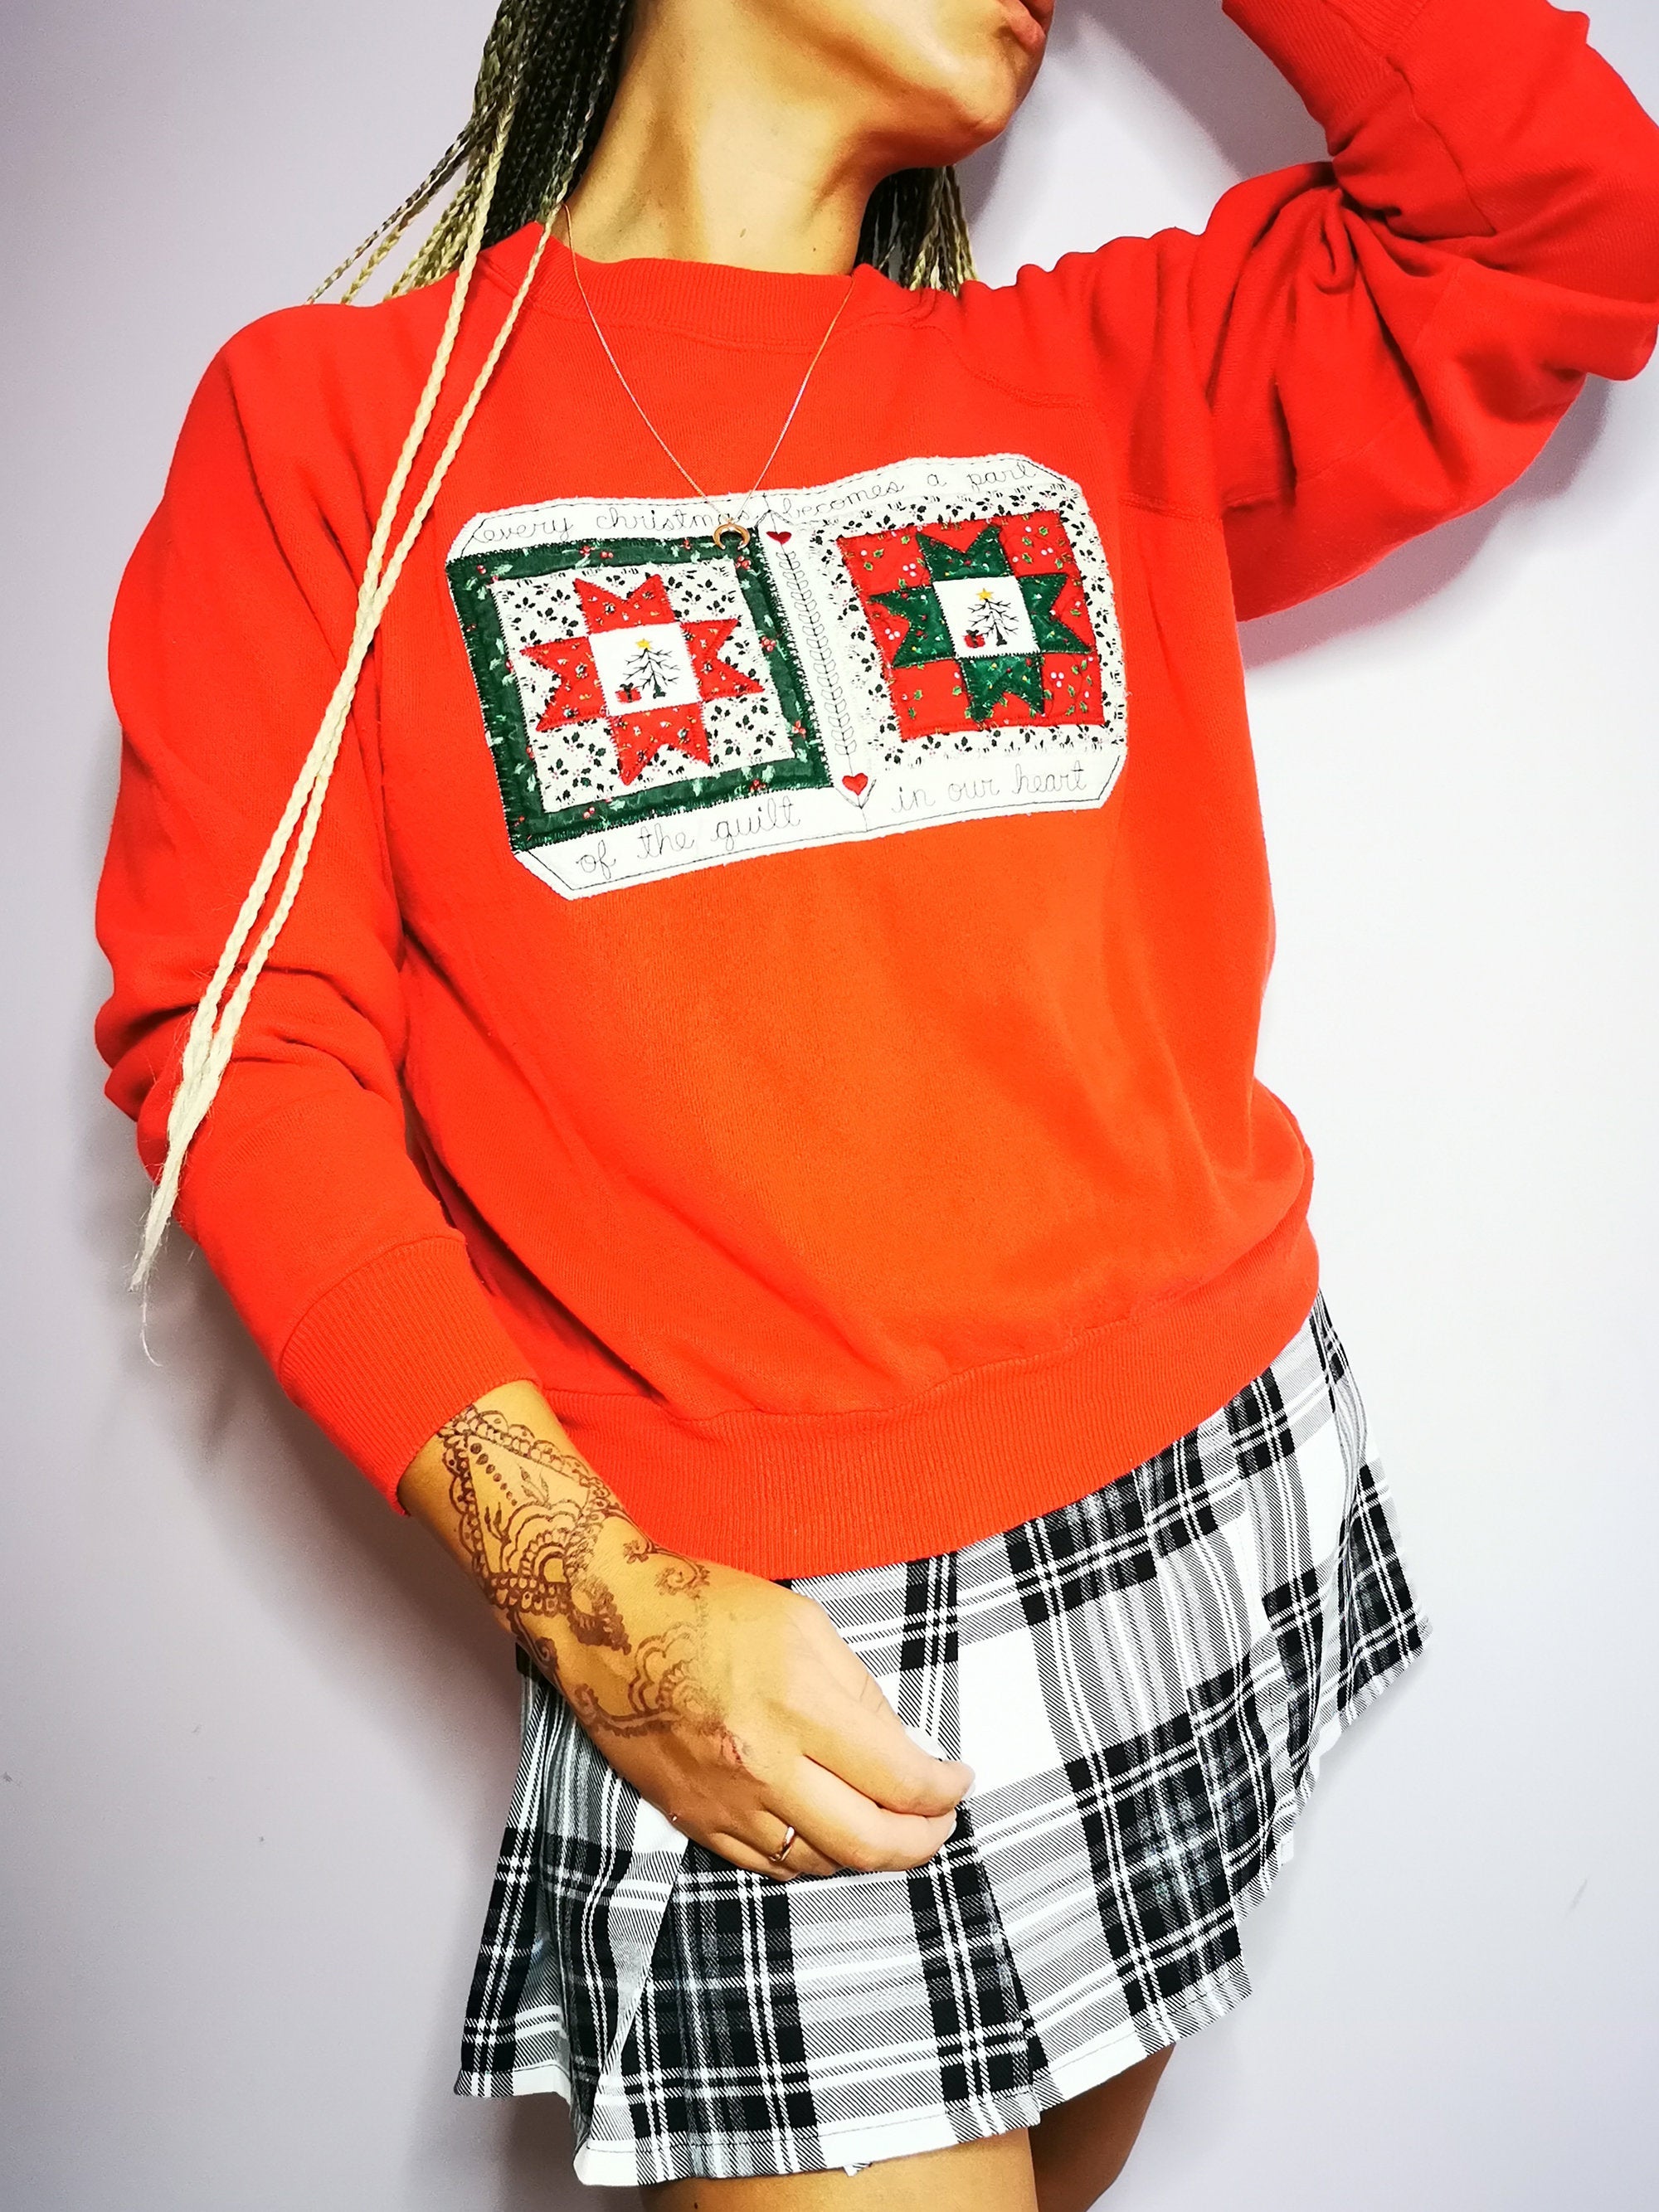 Vintage 90s Christmas slogan embroidered red sweatshirt top